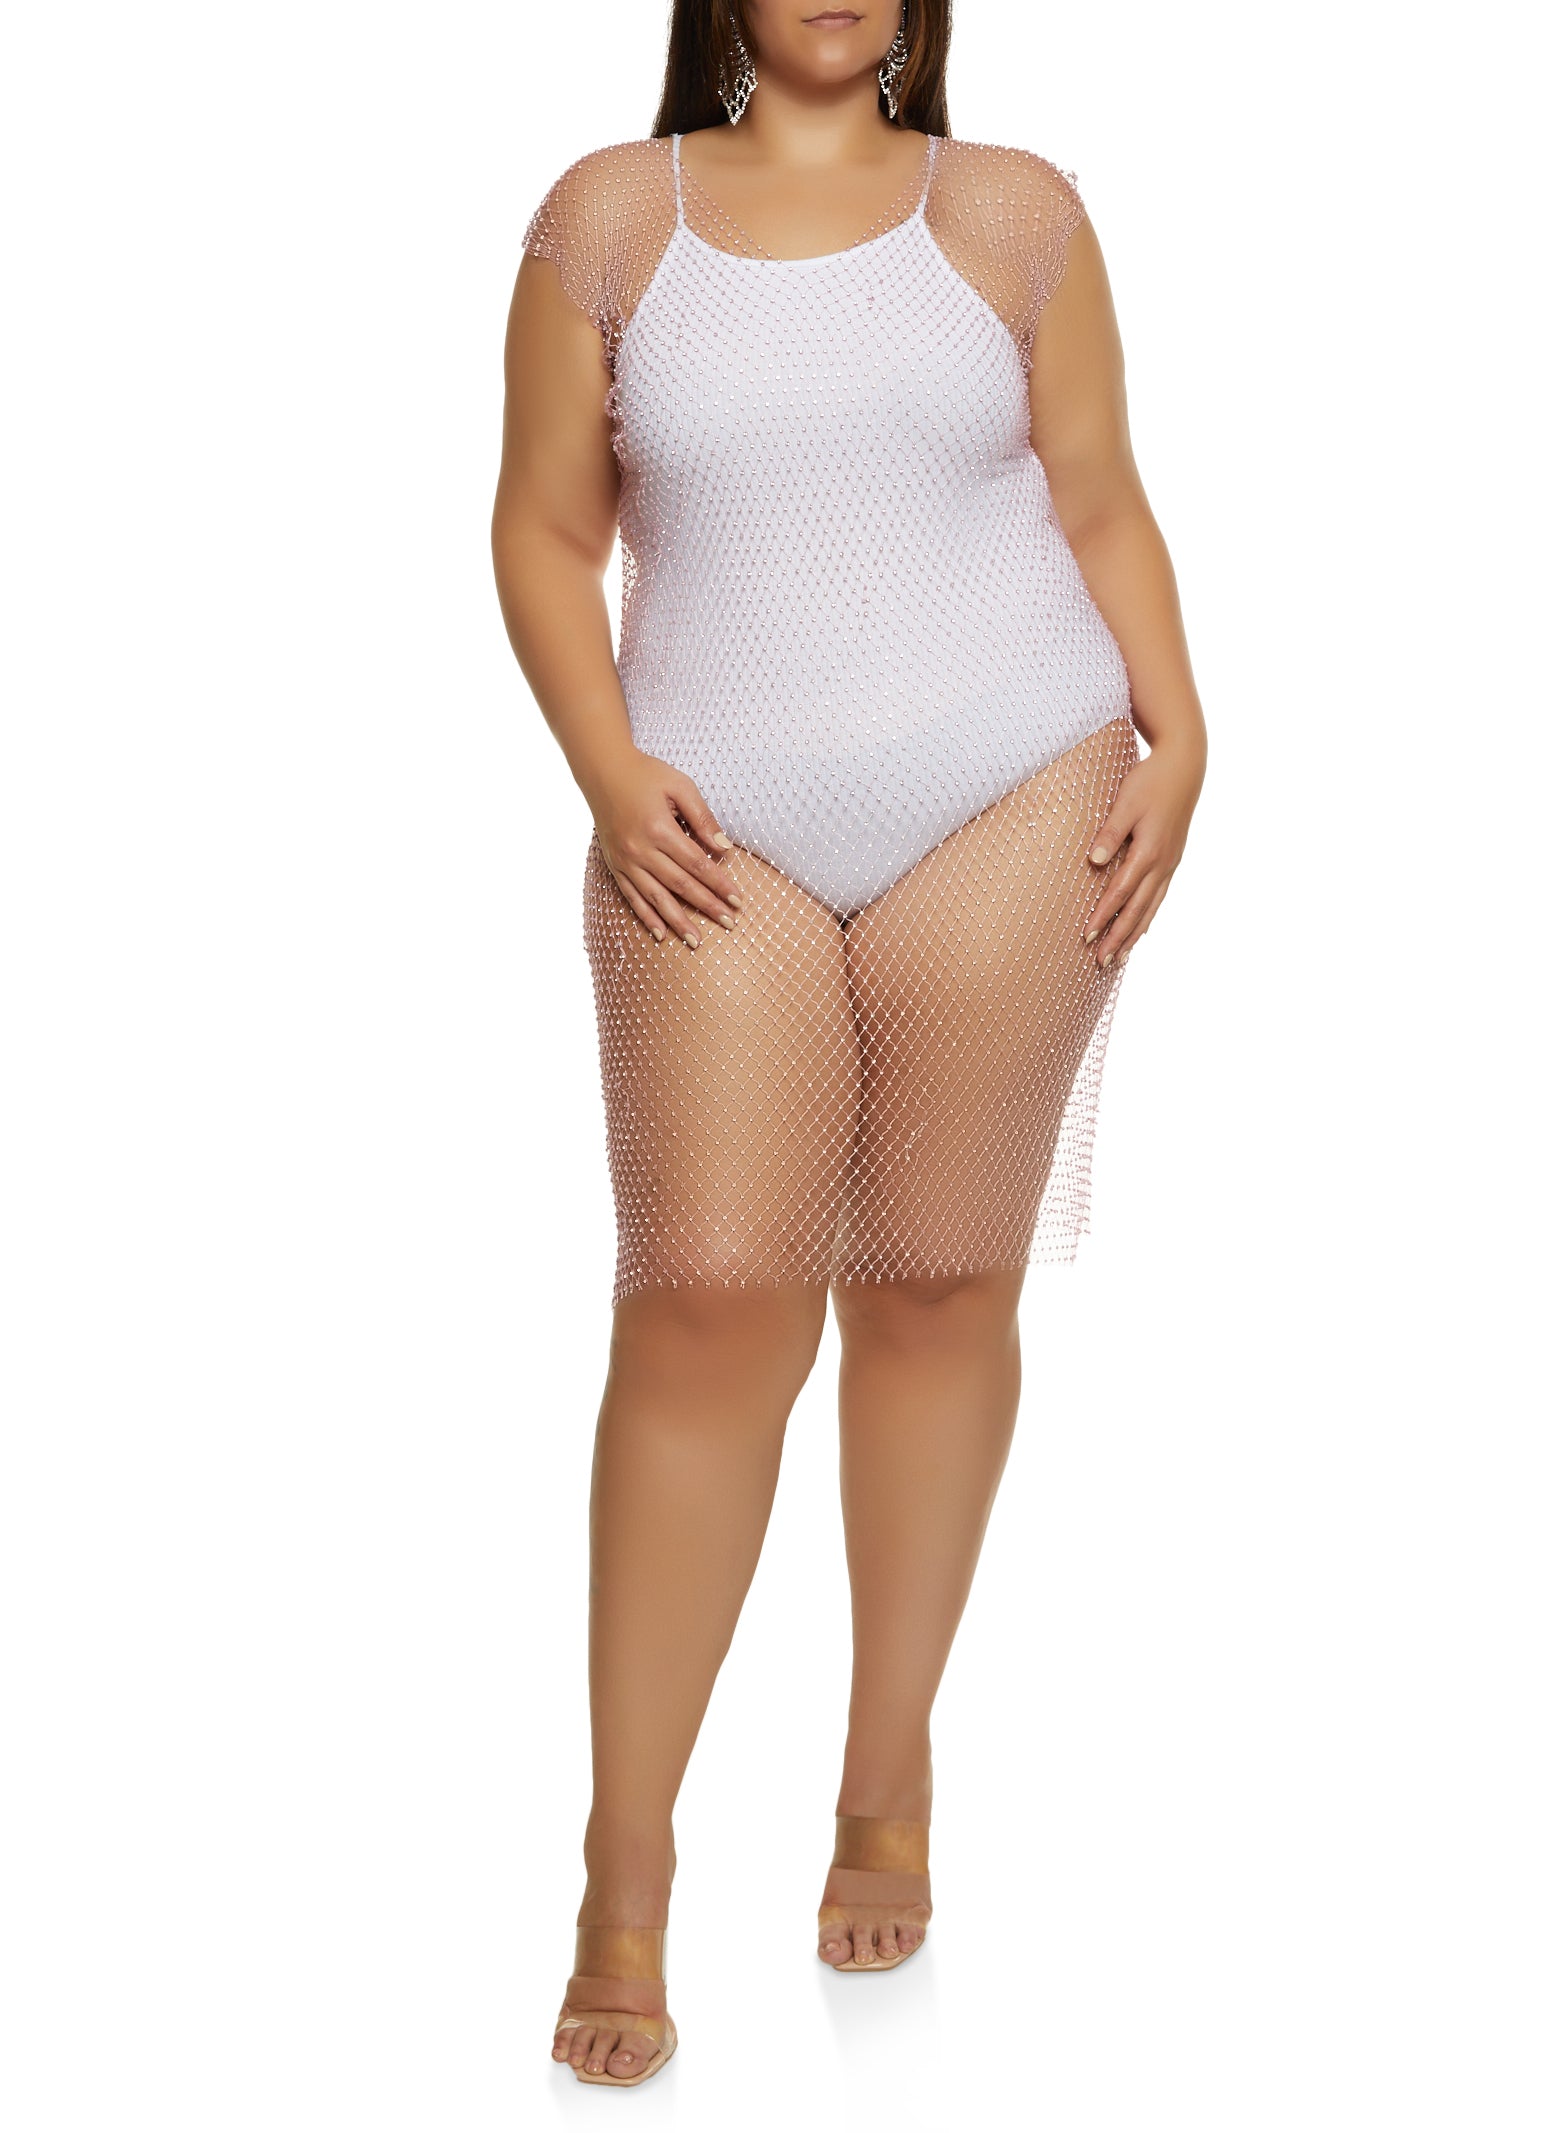 Rhinestone Fishnet Bodysuit, Women's Plus Size Lingerie